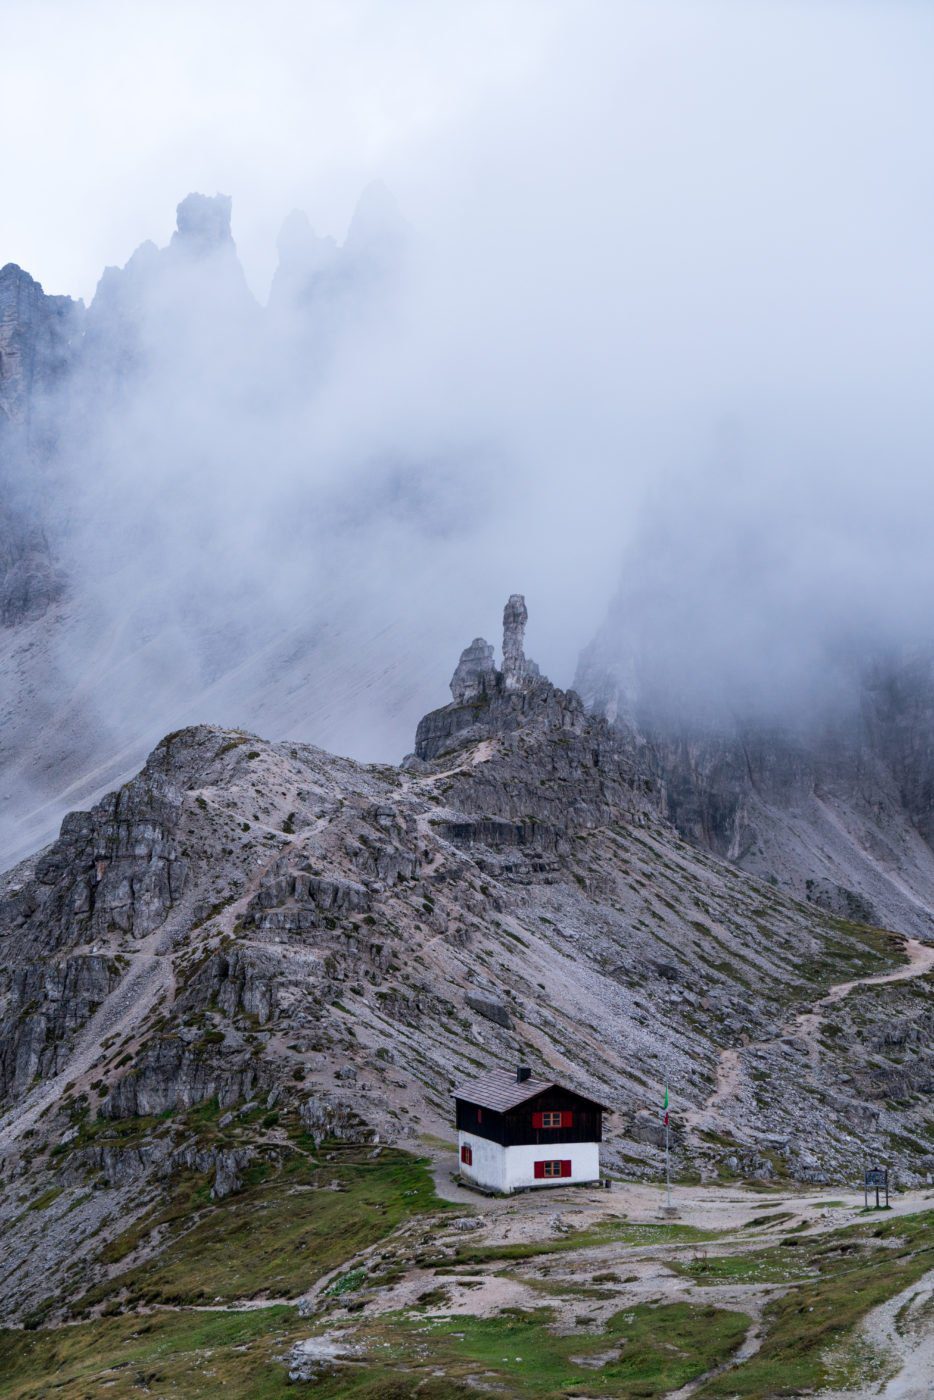 Hut at Tre Cime, Drei Zinnen, famous Instagram location in the Dolomites